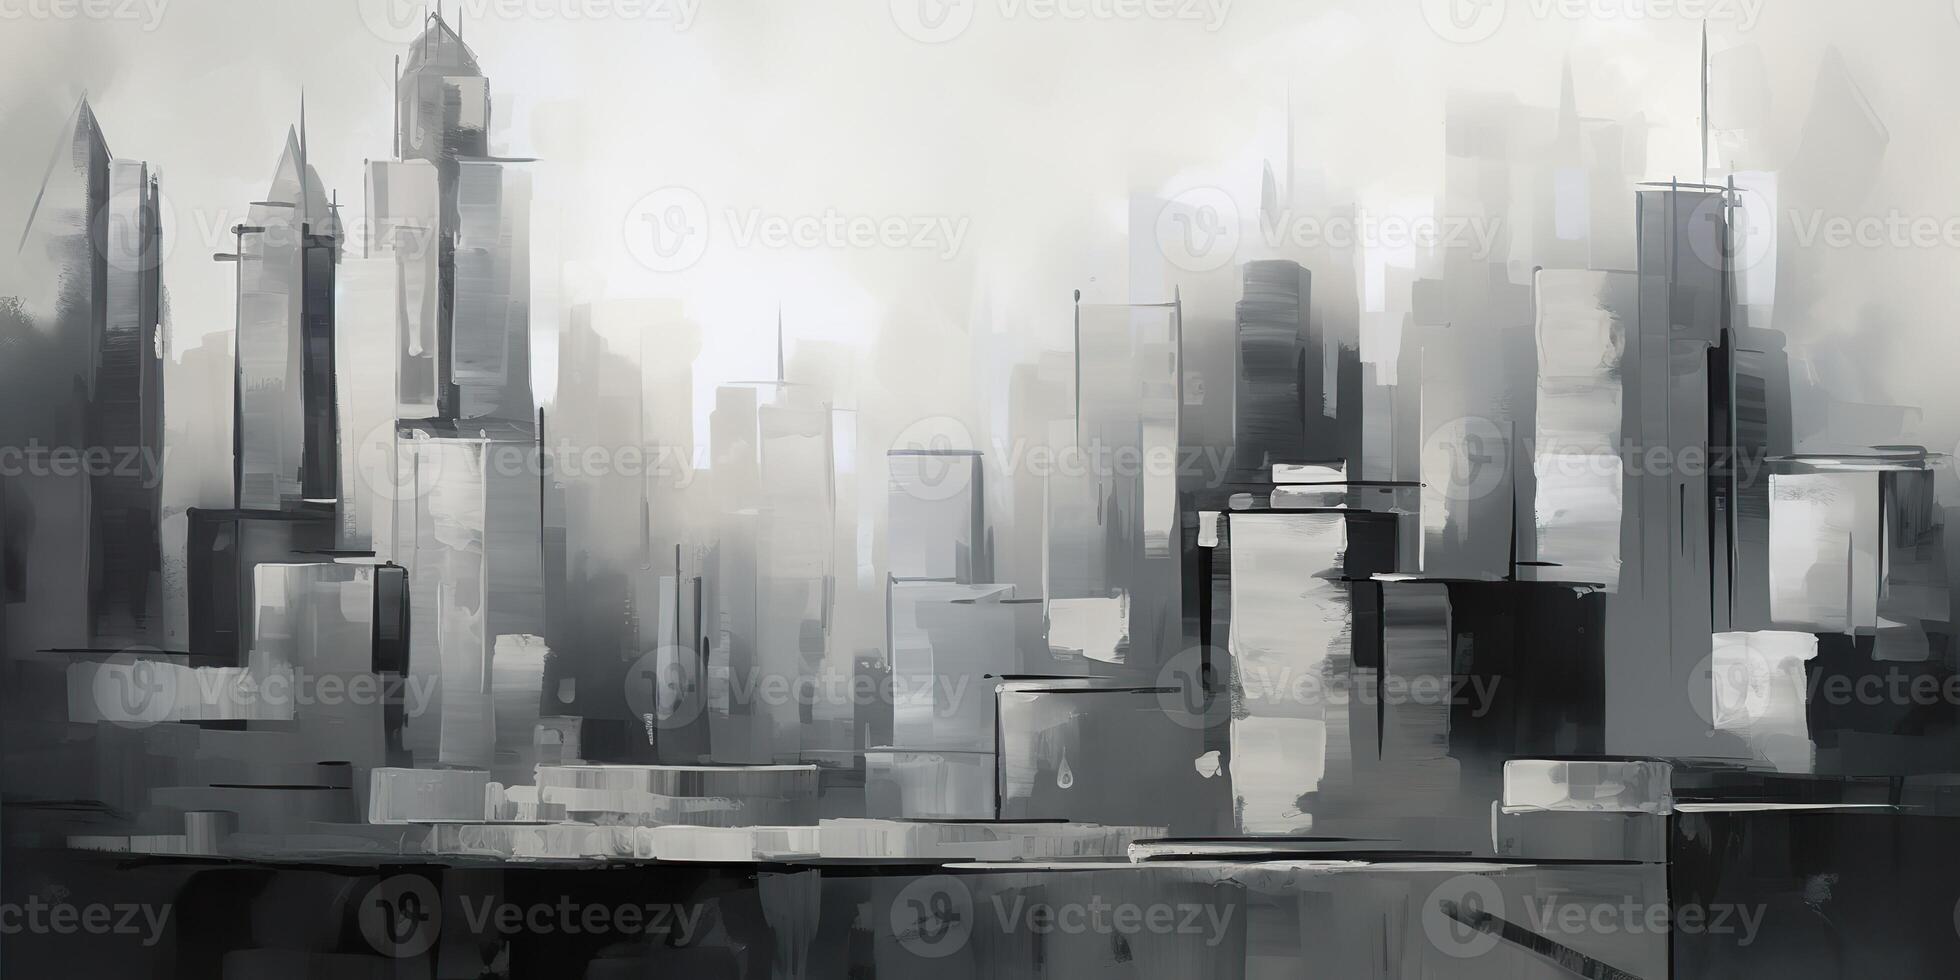 . . Ink pain pen draw illustration of city urban landscape. Graphic Art photo